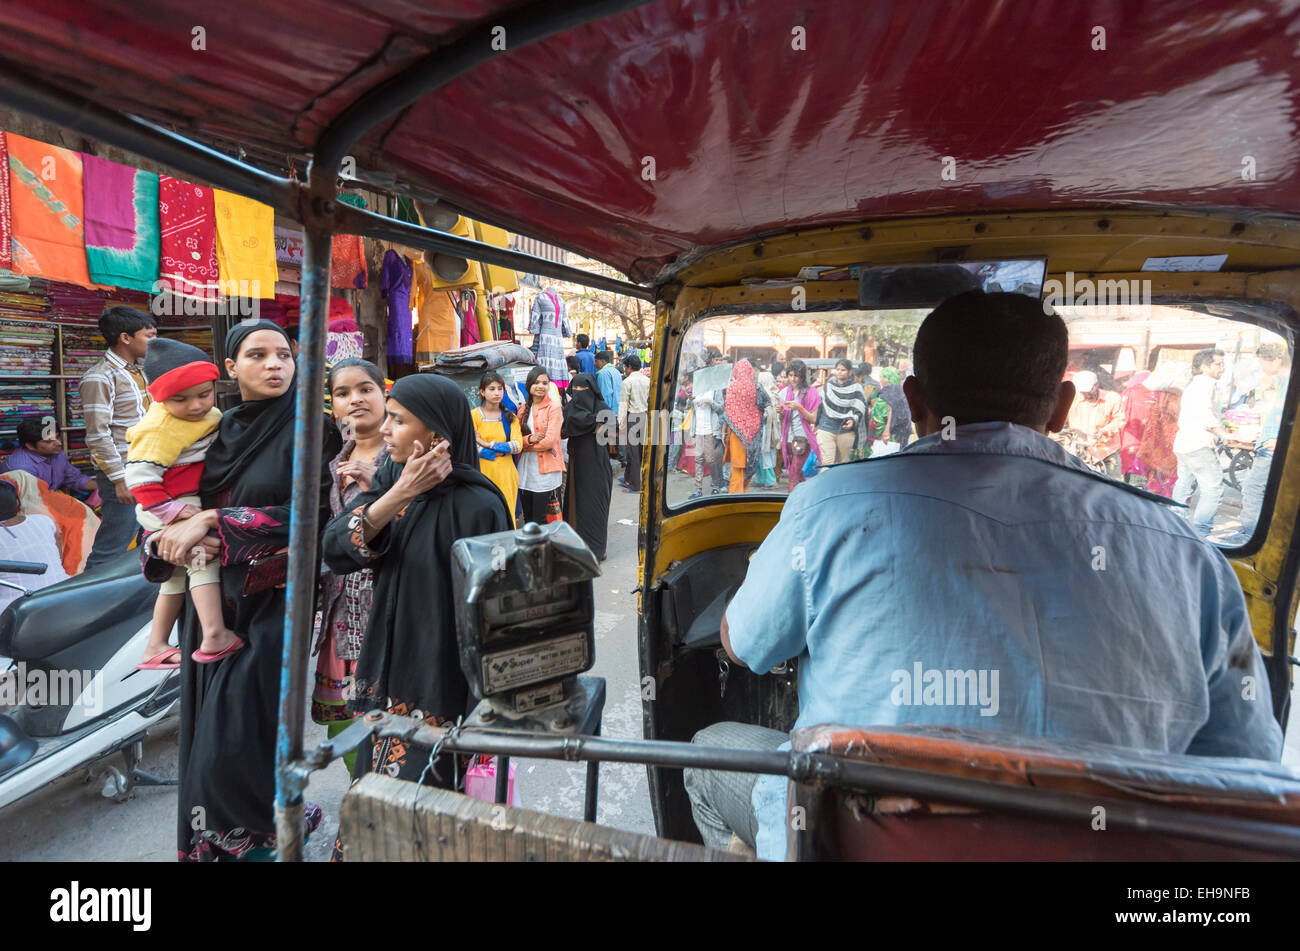 Auto-rickshaw Rides through Busy Street, Jaipur, Rajasthan, India Stock Photo